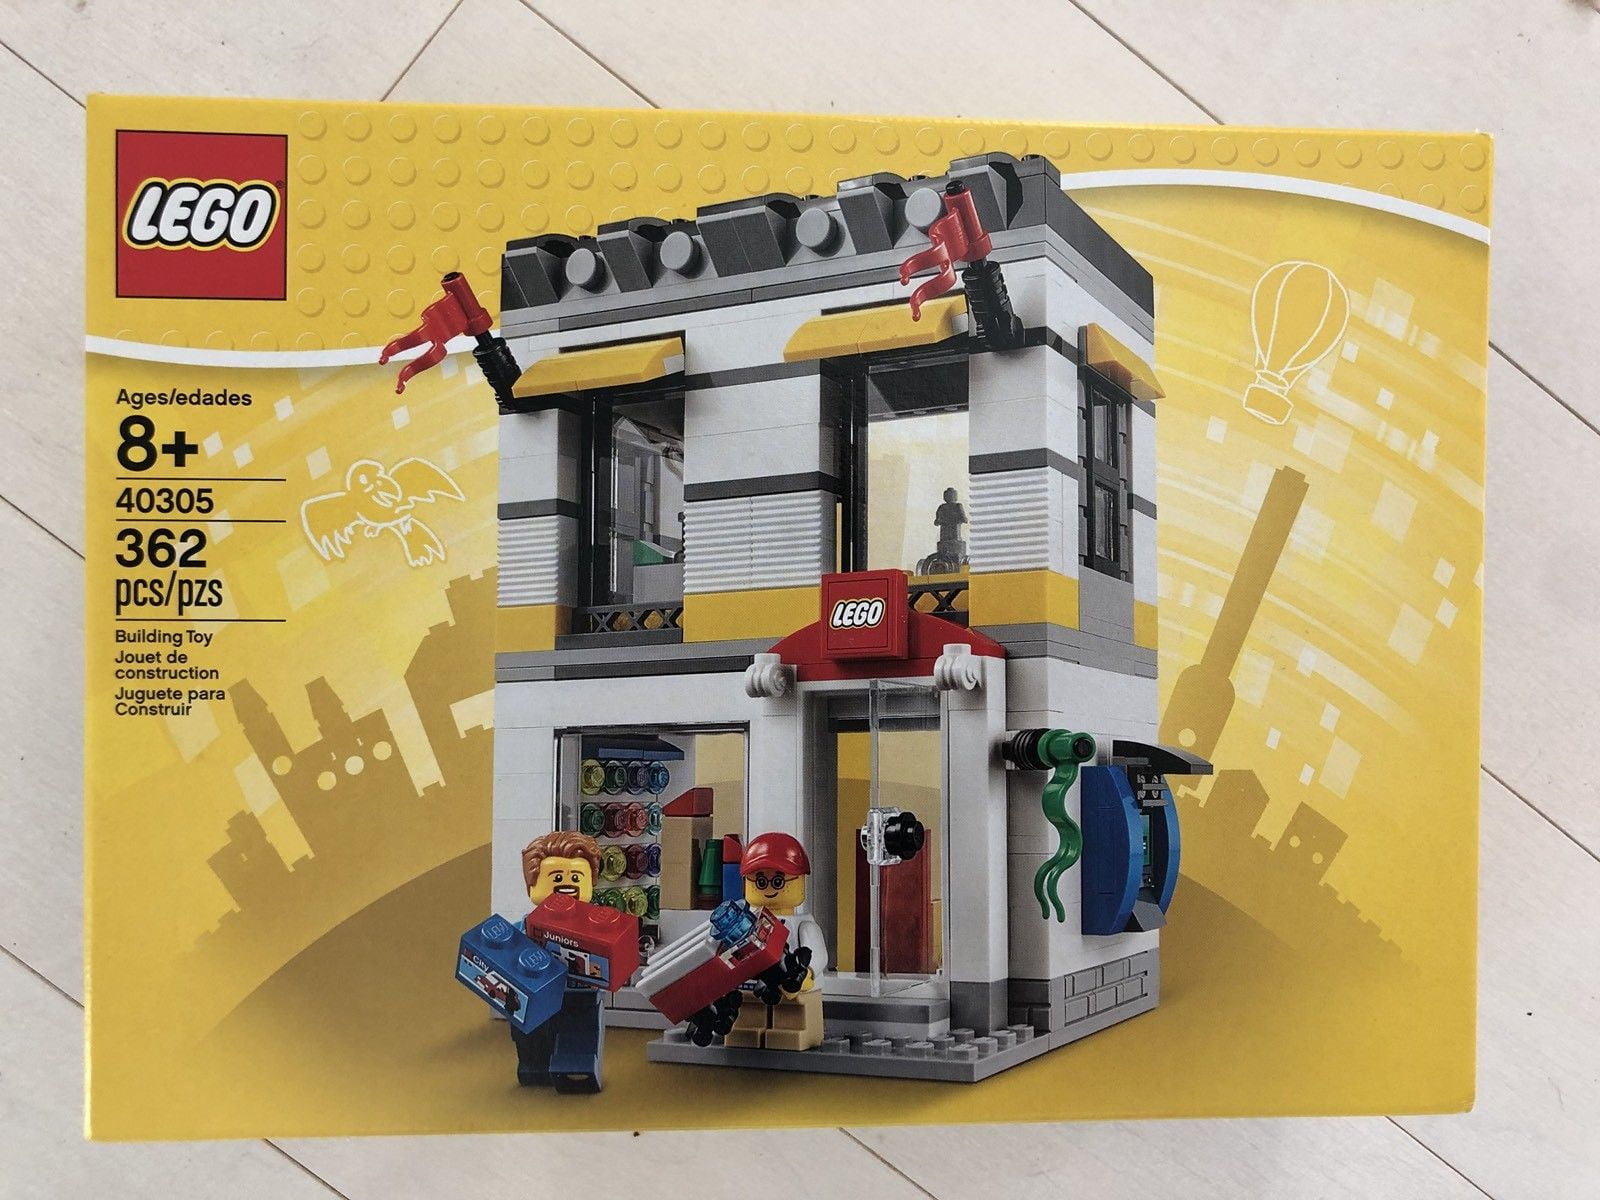 LEGO Brand Store Retail Set Limited Edition 2018 Microscale Flagship - Walmart.com